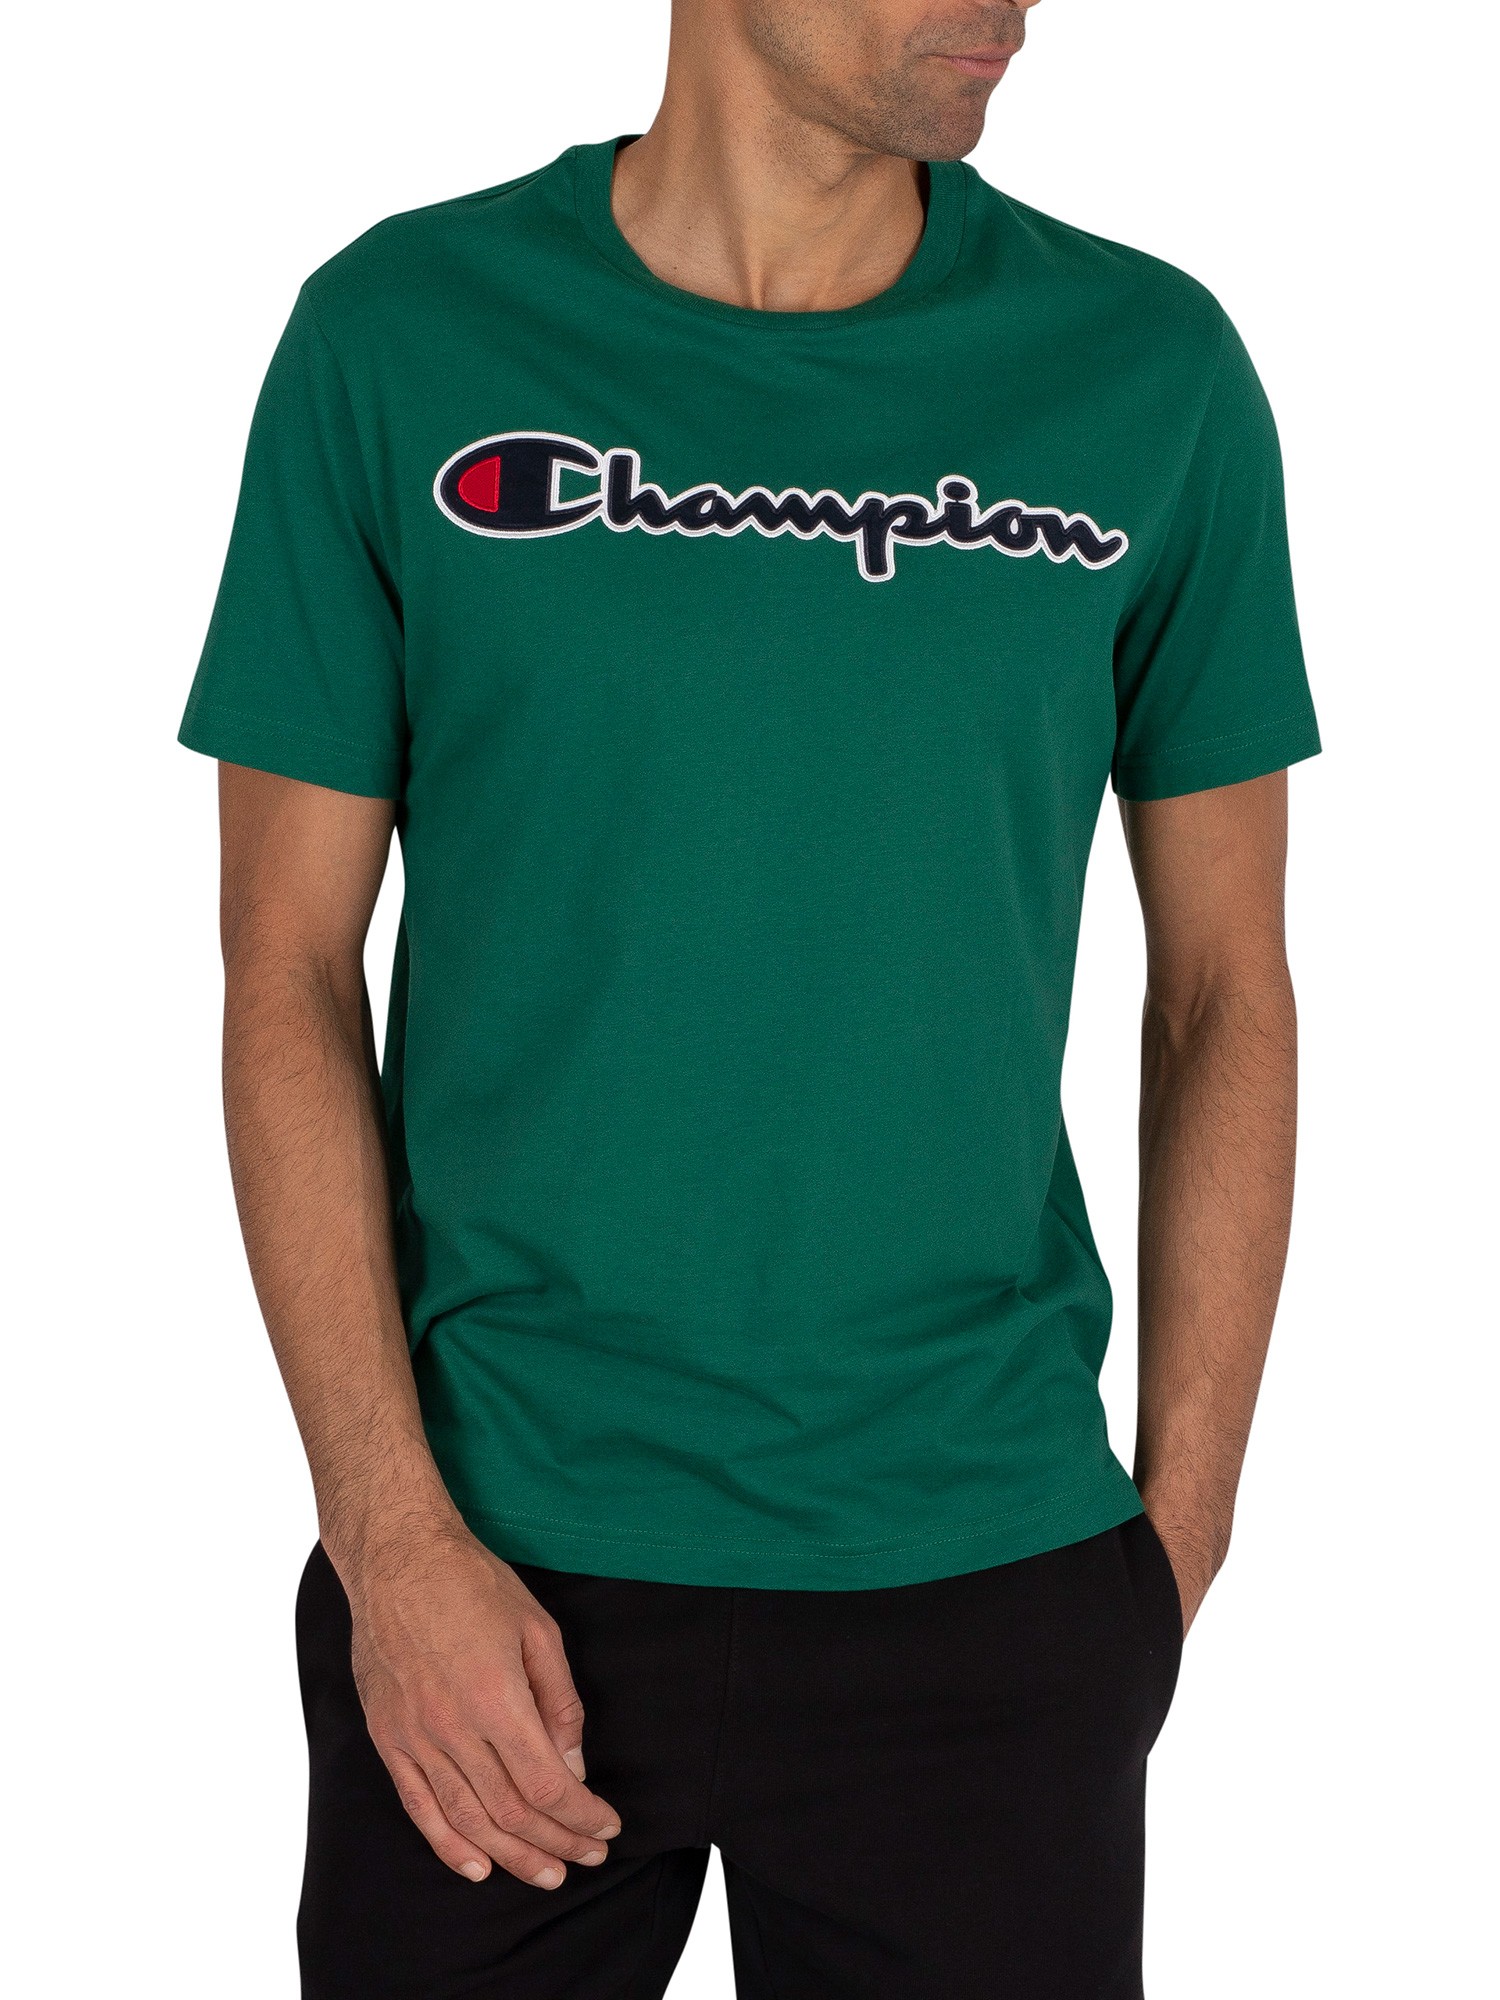 champion t shirt green